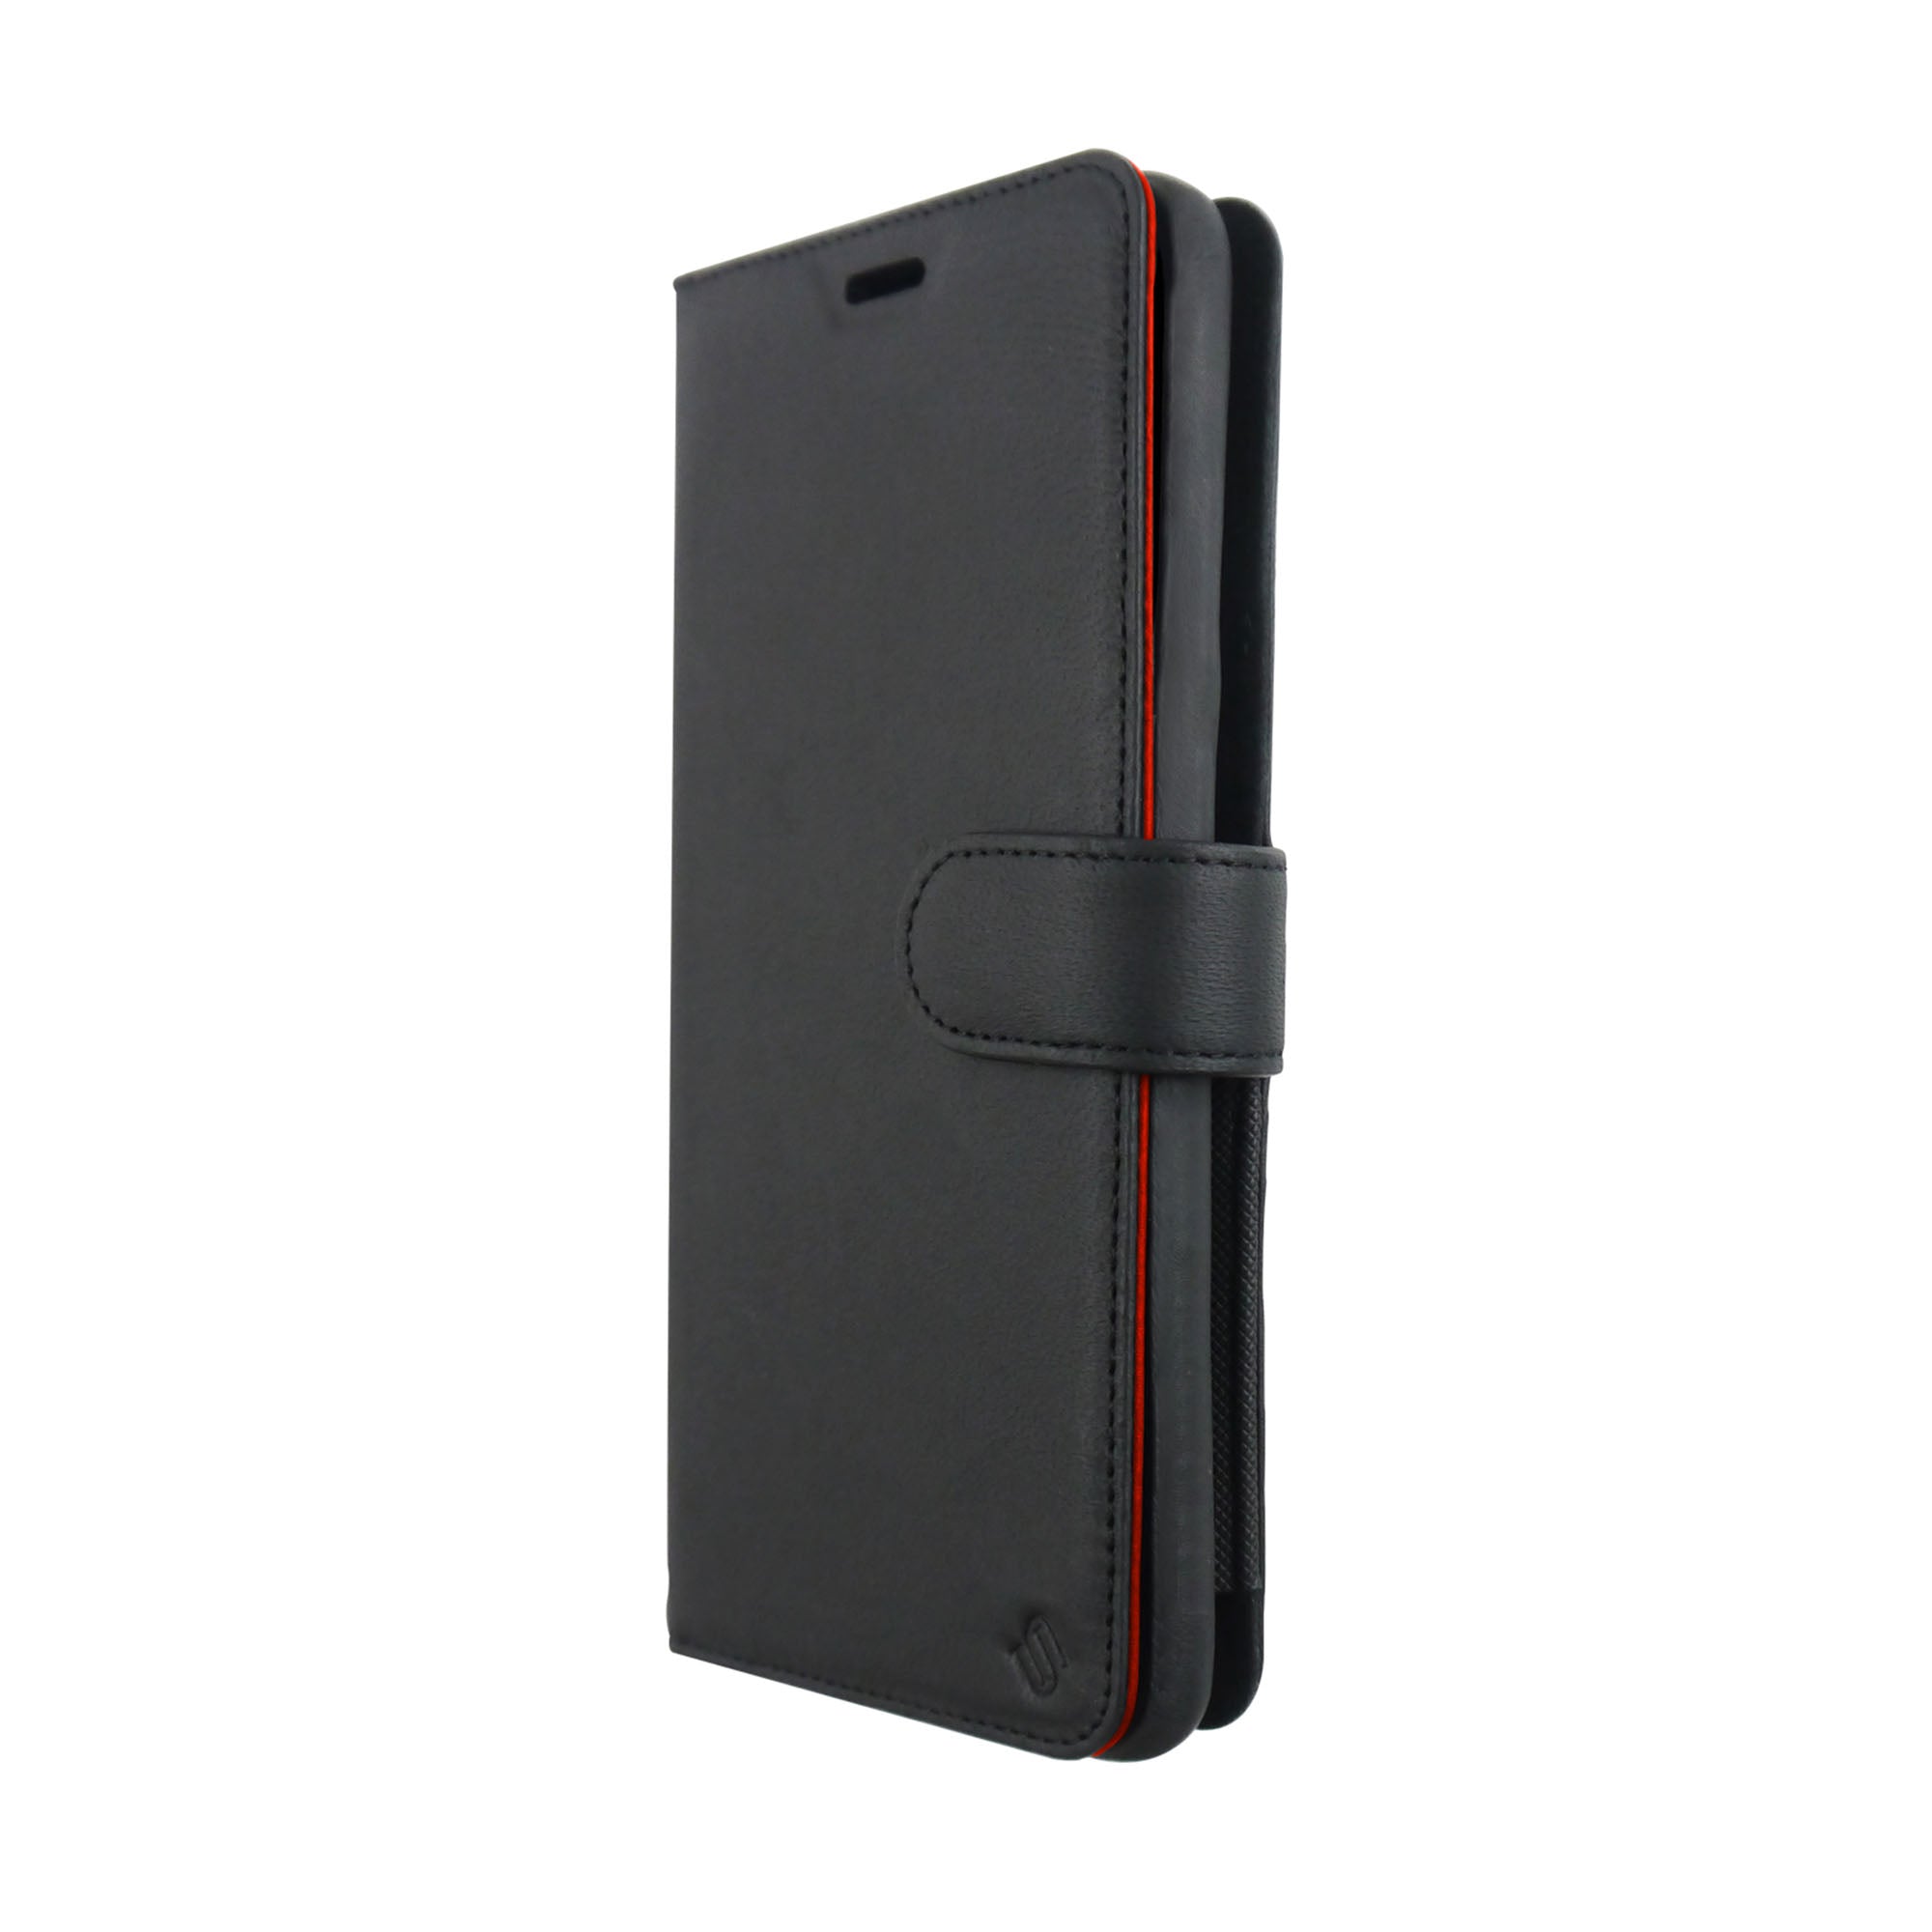 Samsung Galaxy S20+ 5G Uunique Black/Red Nutrisiti 2-in-1 Eco Leather Folio & Detachable Case - 15-06654